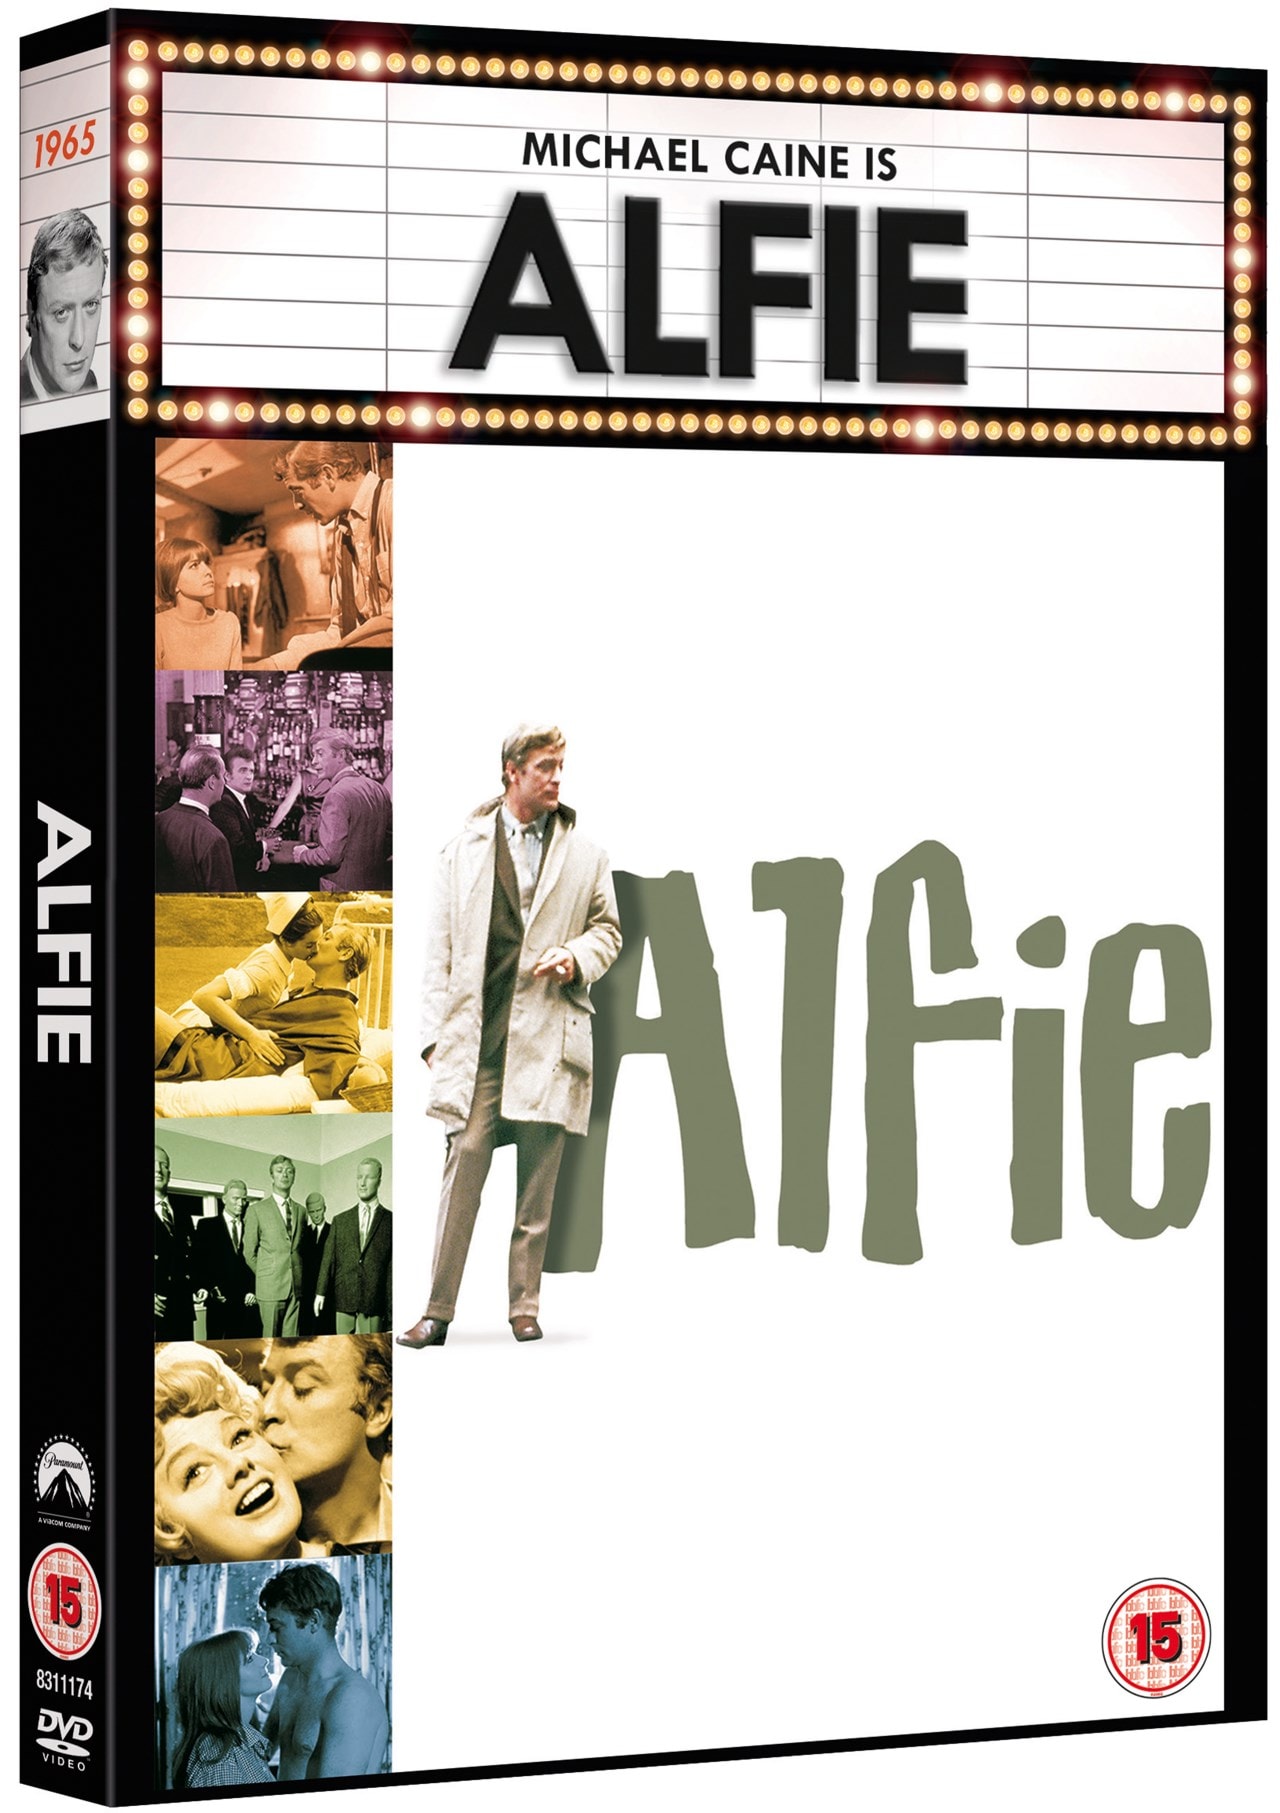 Alfie | DVD | Free shipping over £20 | HMV Store